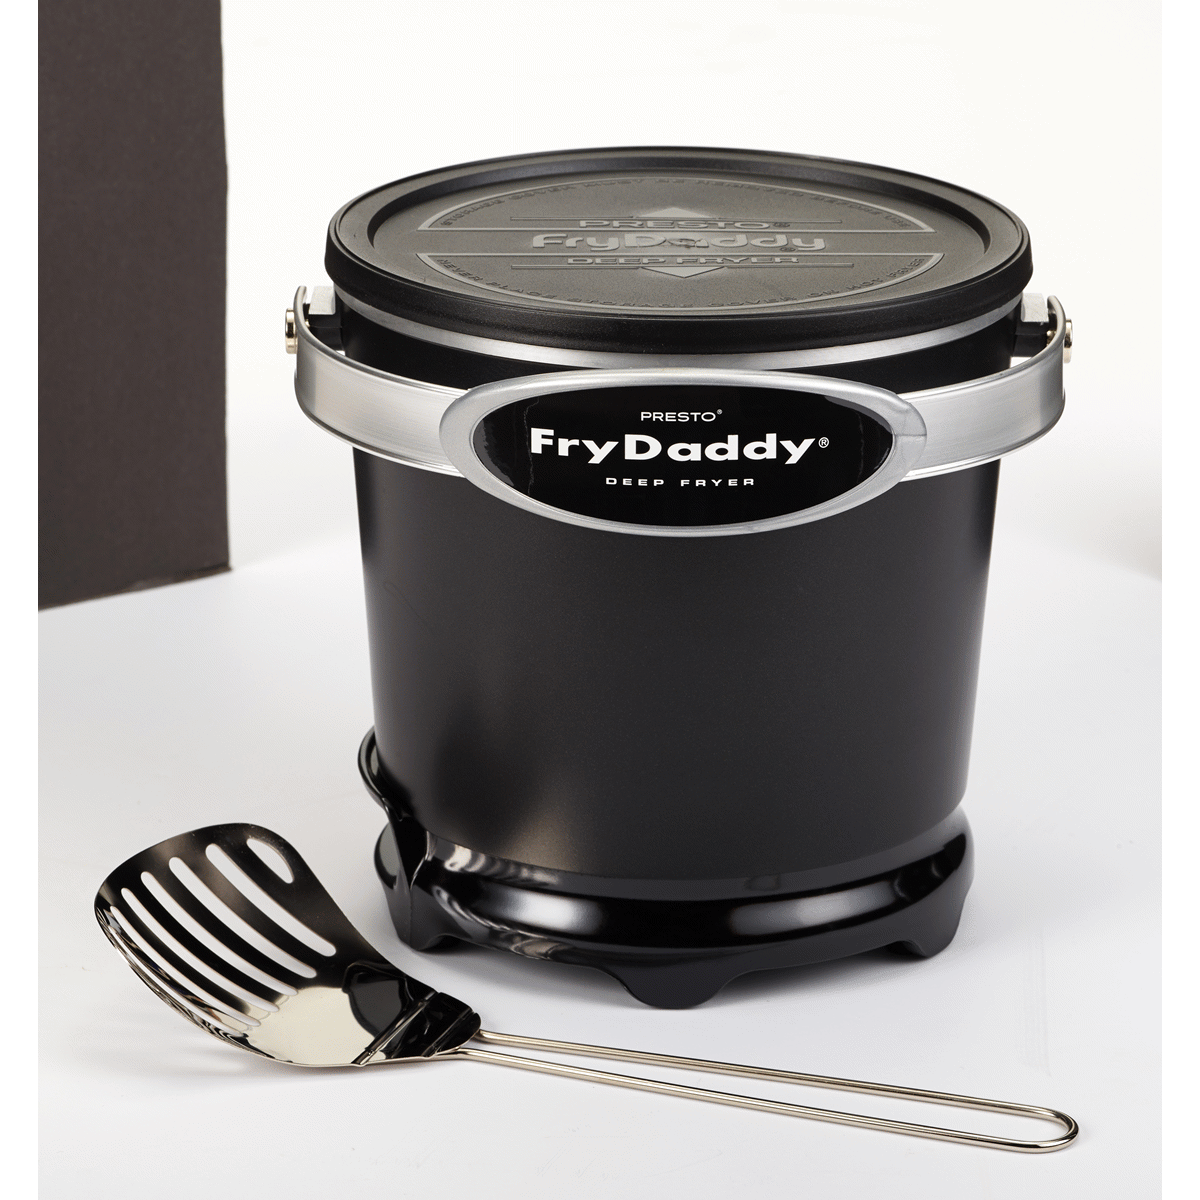 Presto Fry Daddy Plus Electric Deep Fryer - Black 4 cups